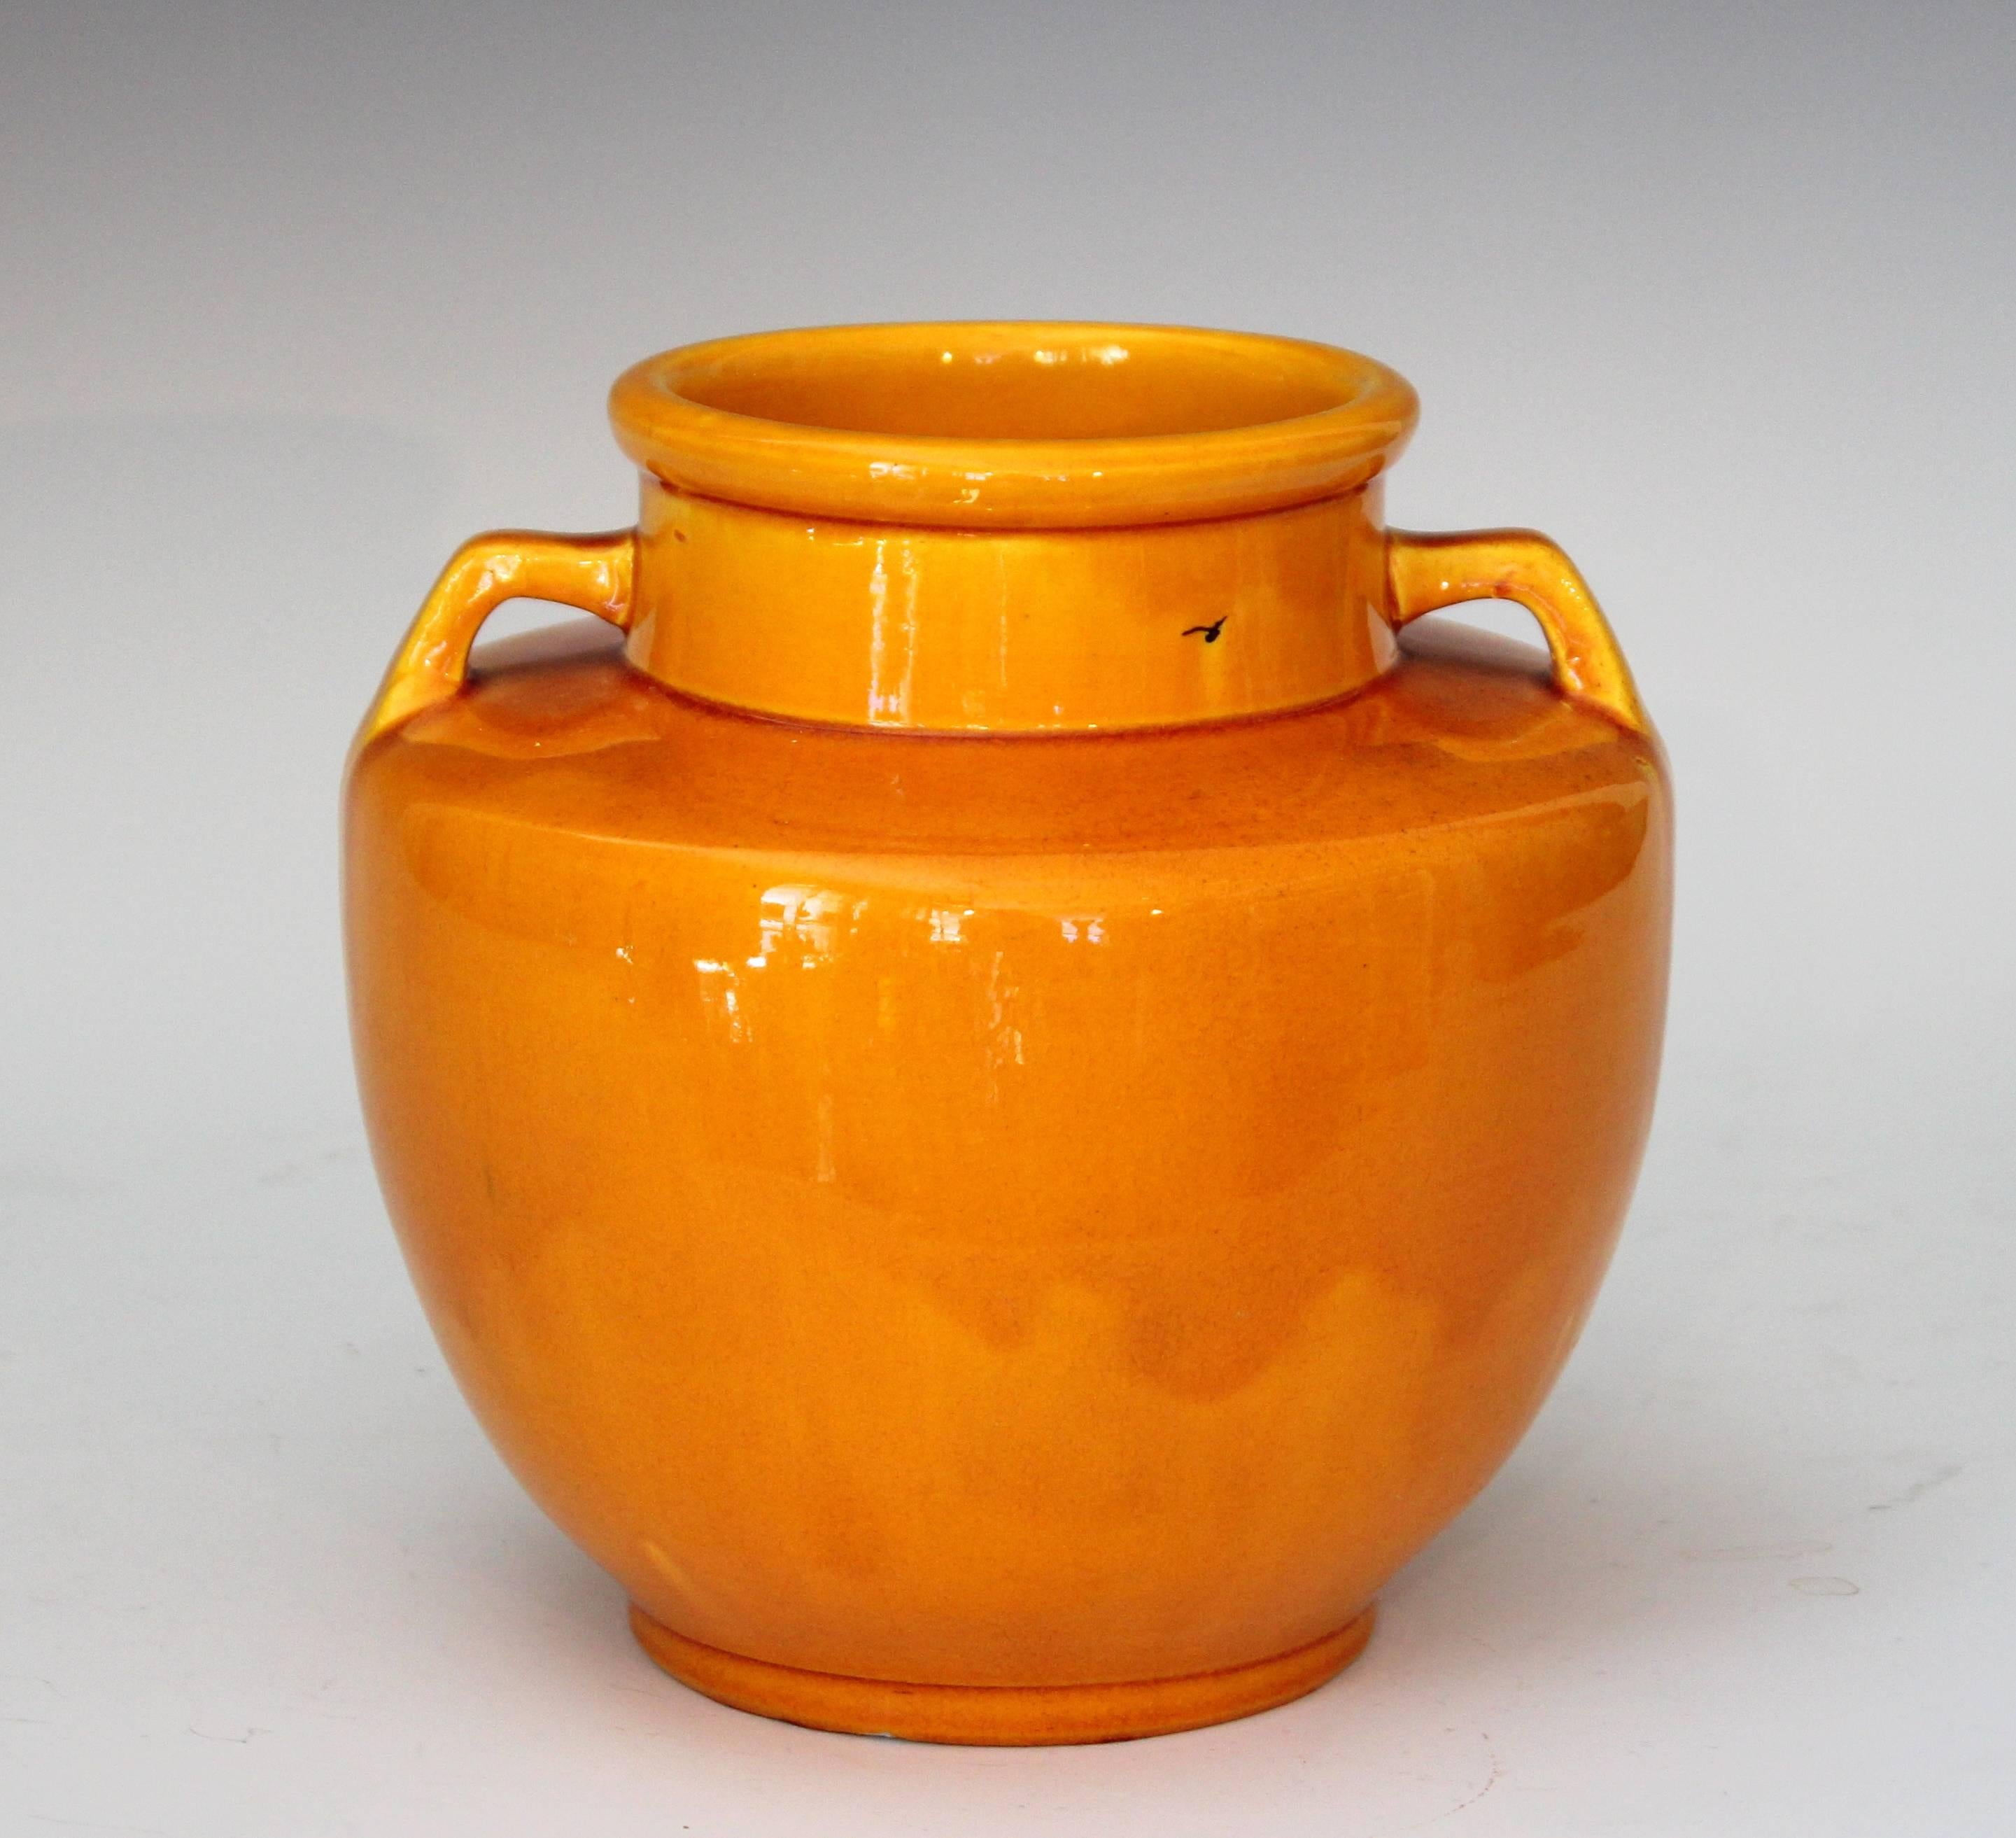 Vintage hand-turned Awaji vase in sleek Art Deco form and bright yellow glaze, circa 1930. Measures: 7 1/4